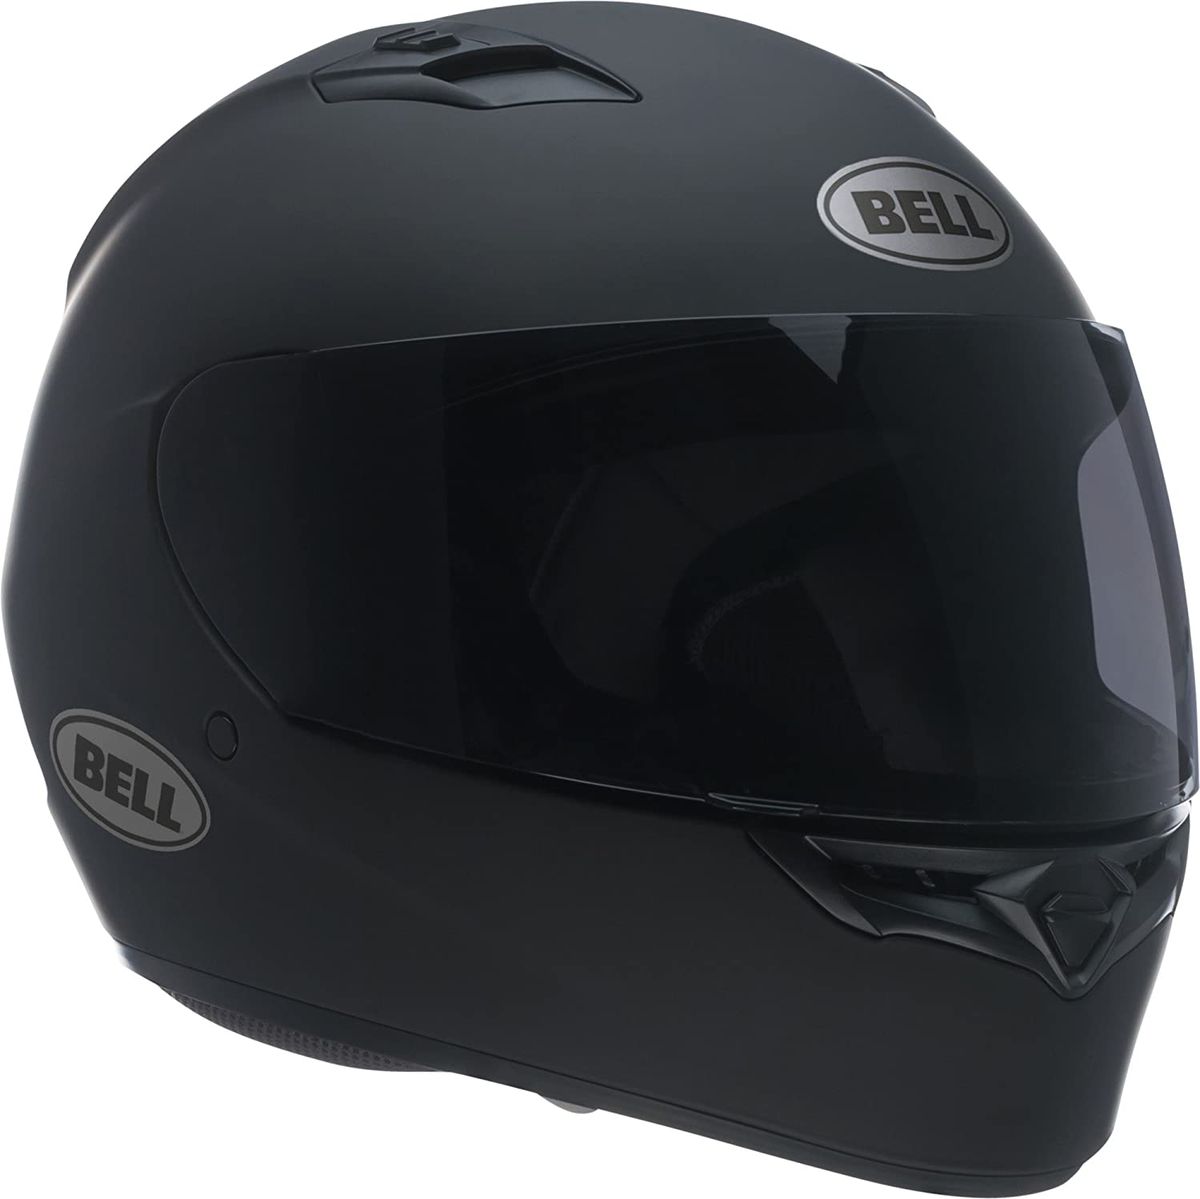 BELL - Qualifier Road Motorcycle Helmet - Matte Black | Buy Online in